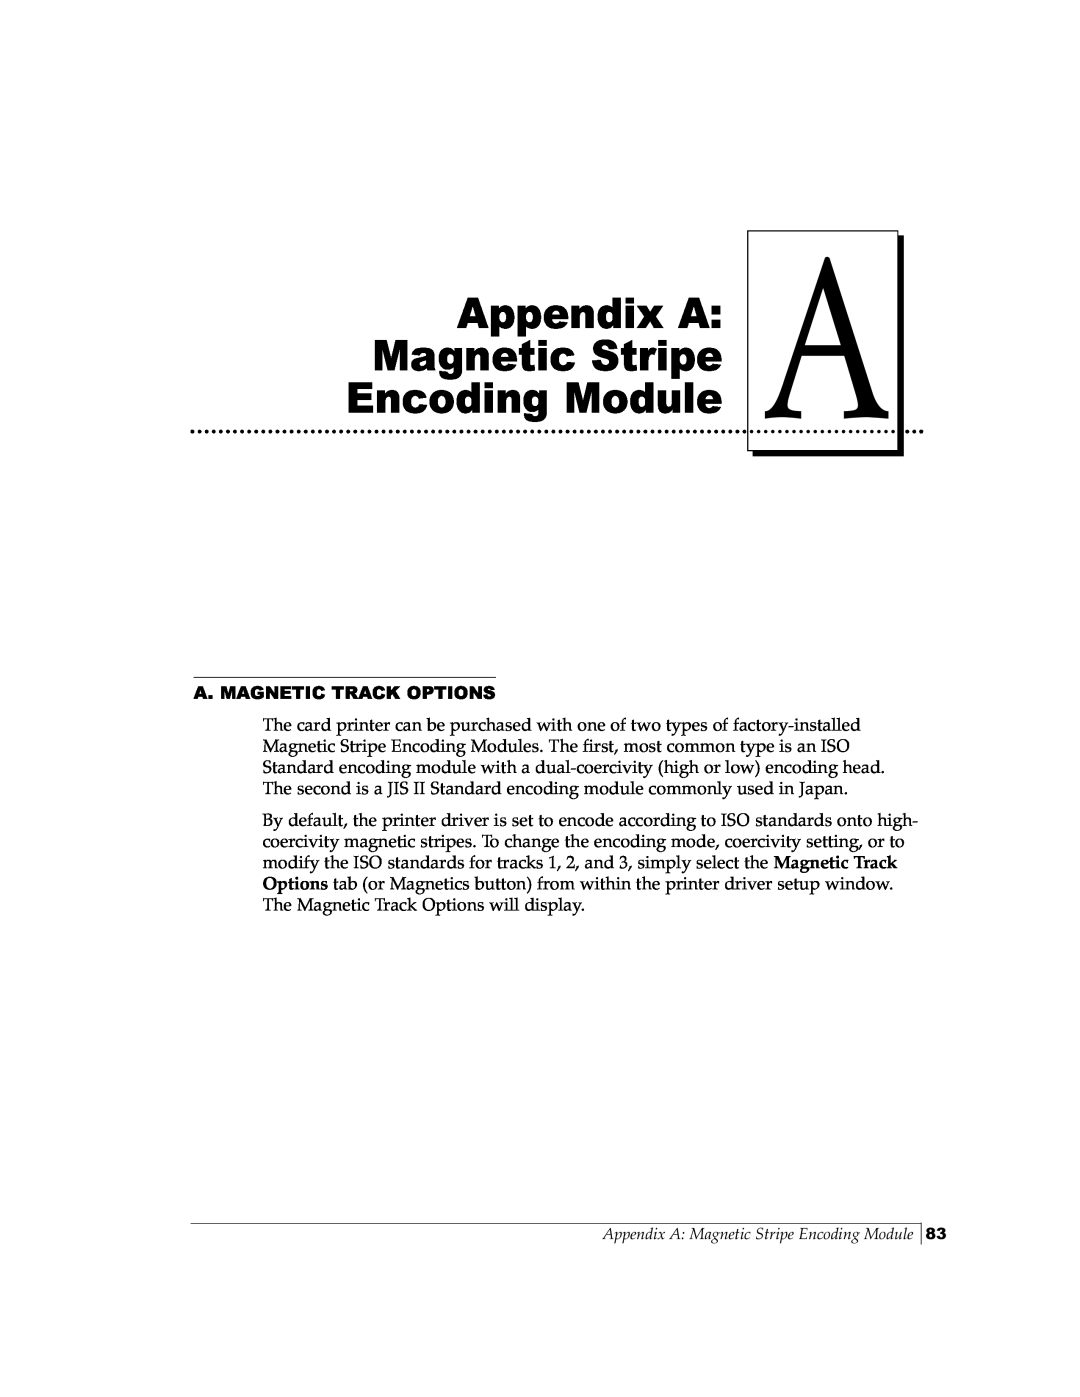 FARGO electronic Pro-L manual Appendix A Magnetic Stripe Encoding Module, A. Magnetic Track Options 